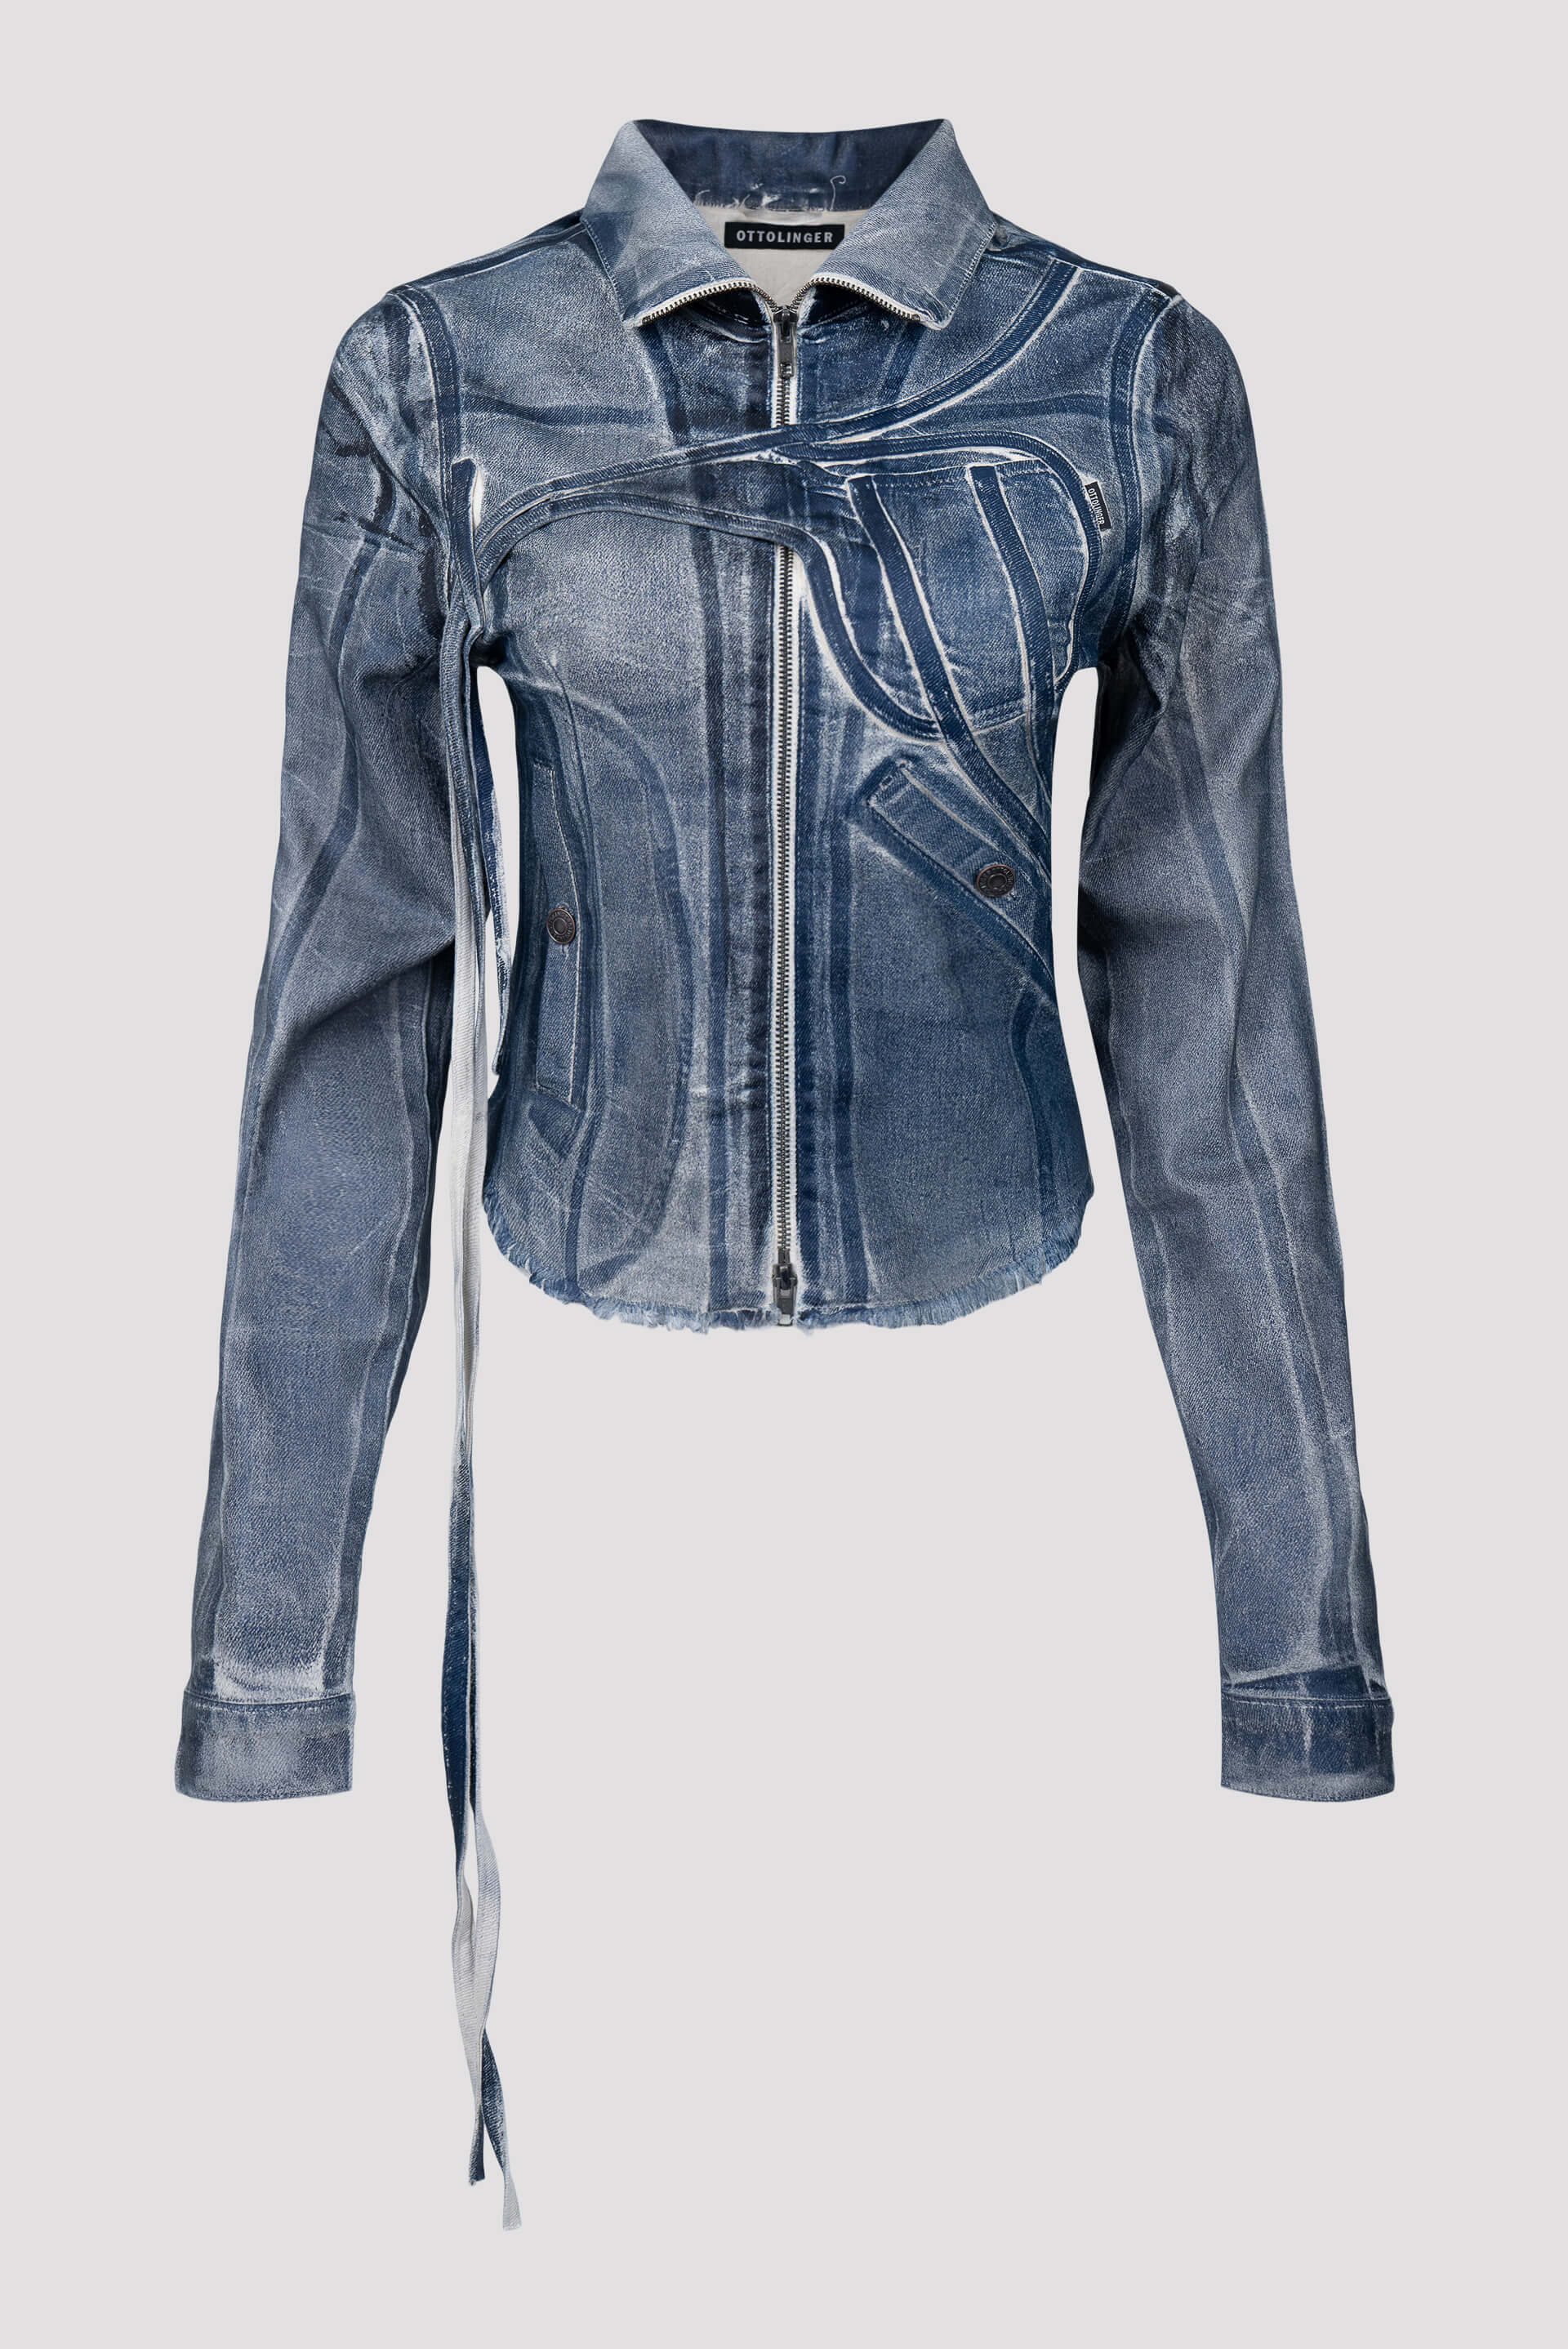 Prana Blue Denim Jean Jacket Stretch Fabric Crop Womens Sz Medium M Cotton  Blend | eBay